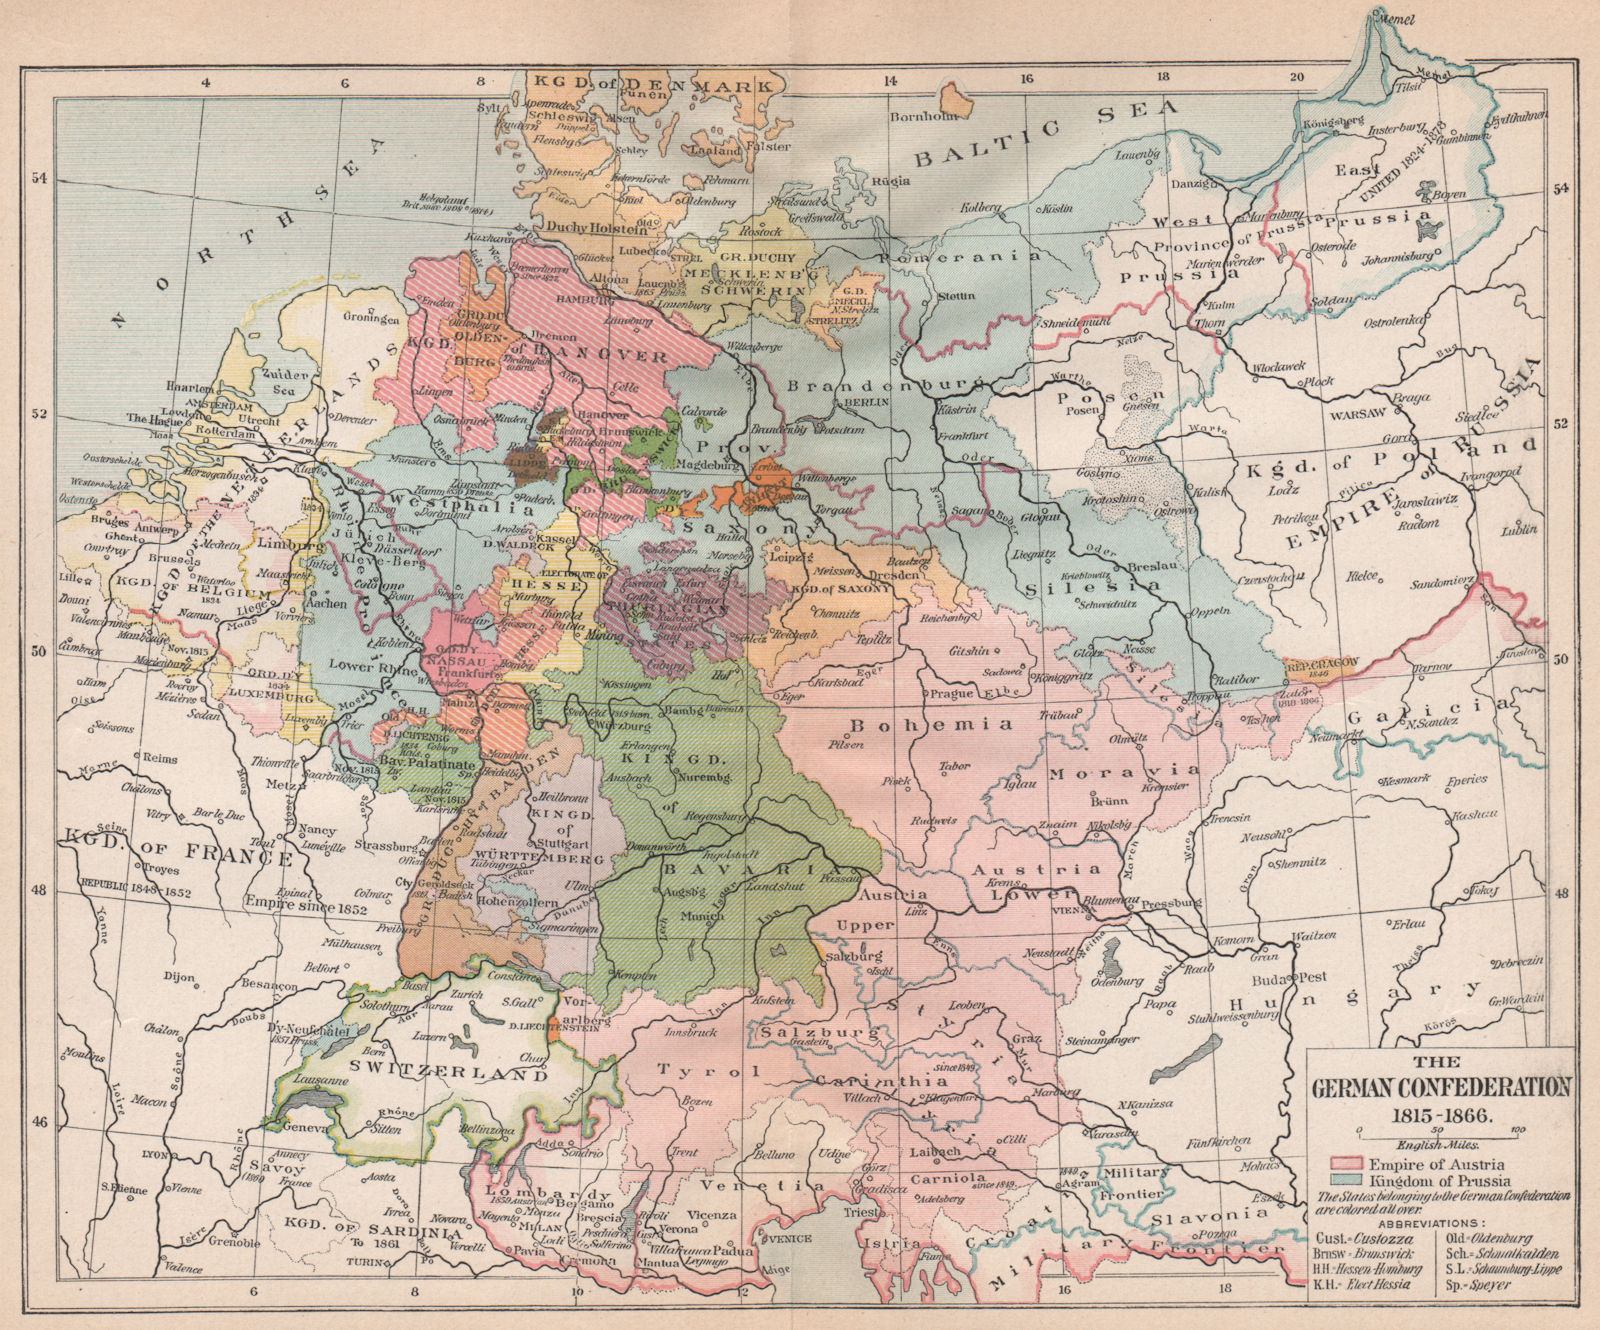 Associate Product GERMAN CONFEDERATION 1815-1866. Empire of Austria. Kingdom of Prussia 1917 map